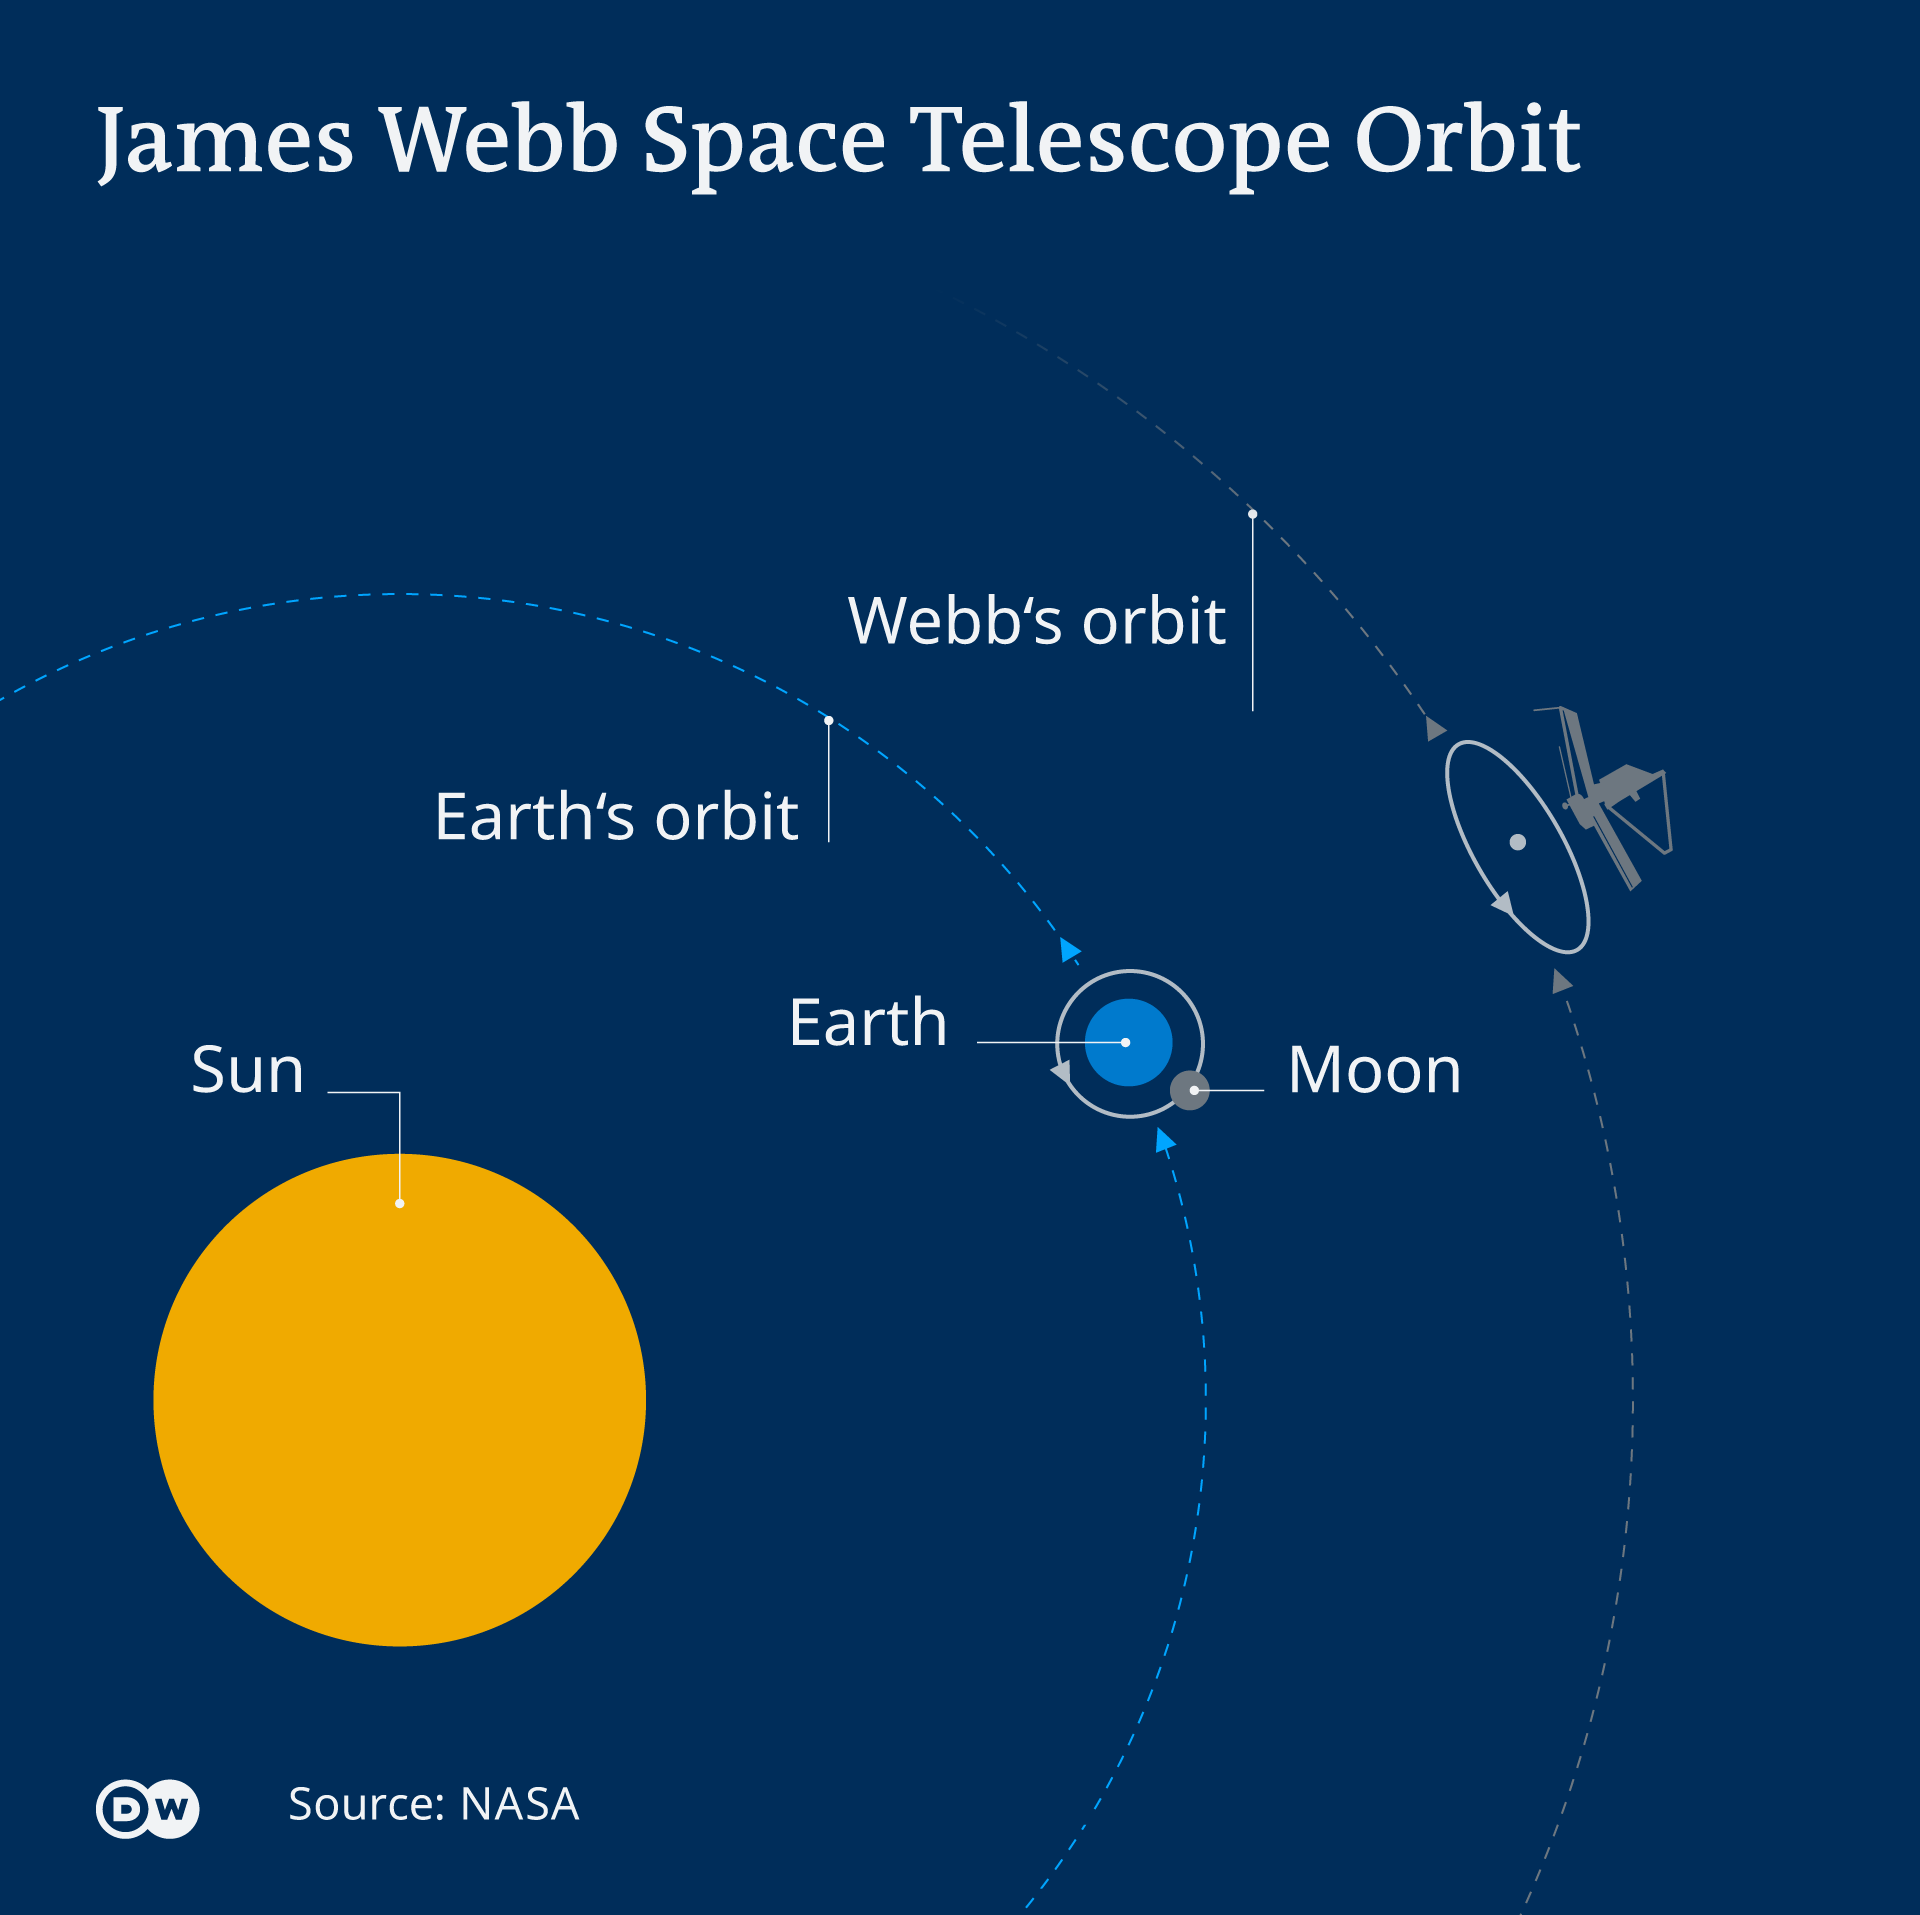 Infographic illustrating the orbit of the James Webb Space Telescope